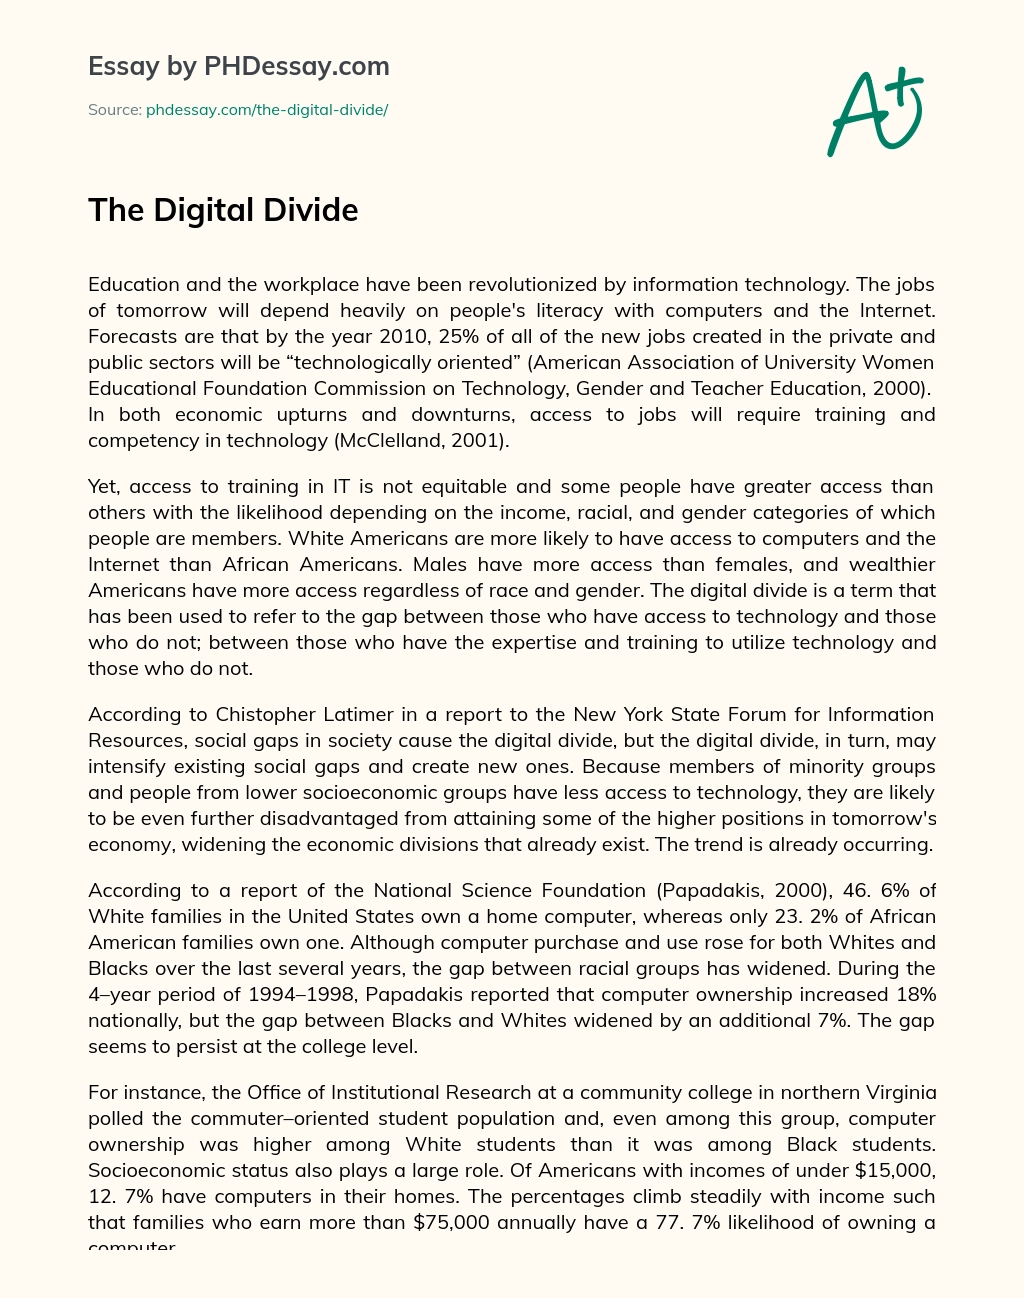 The Digital Divide essay